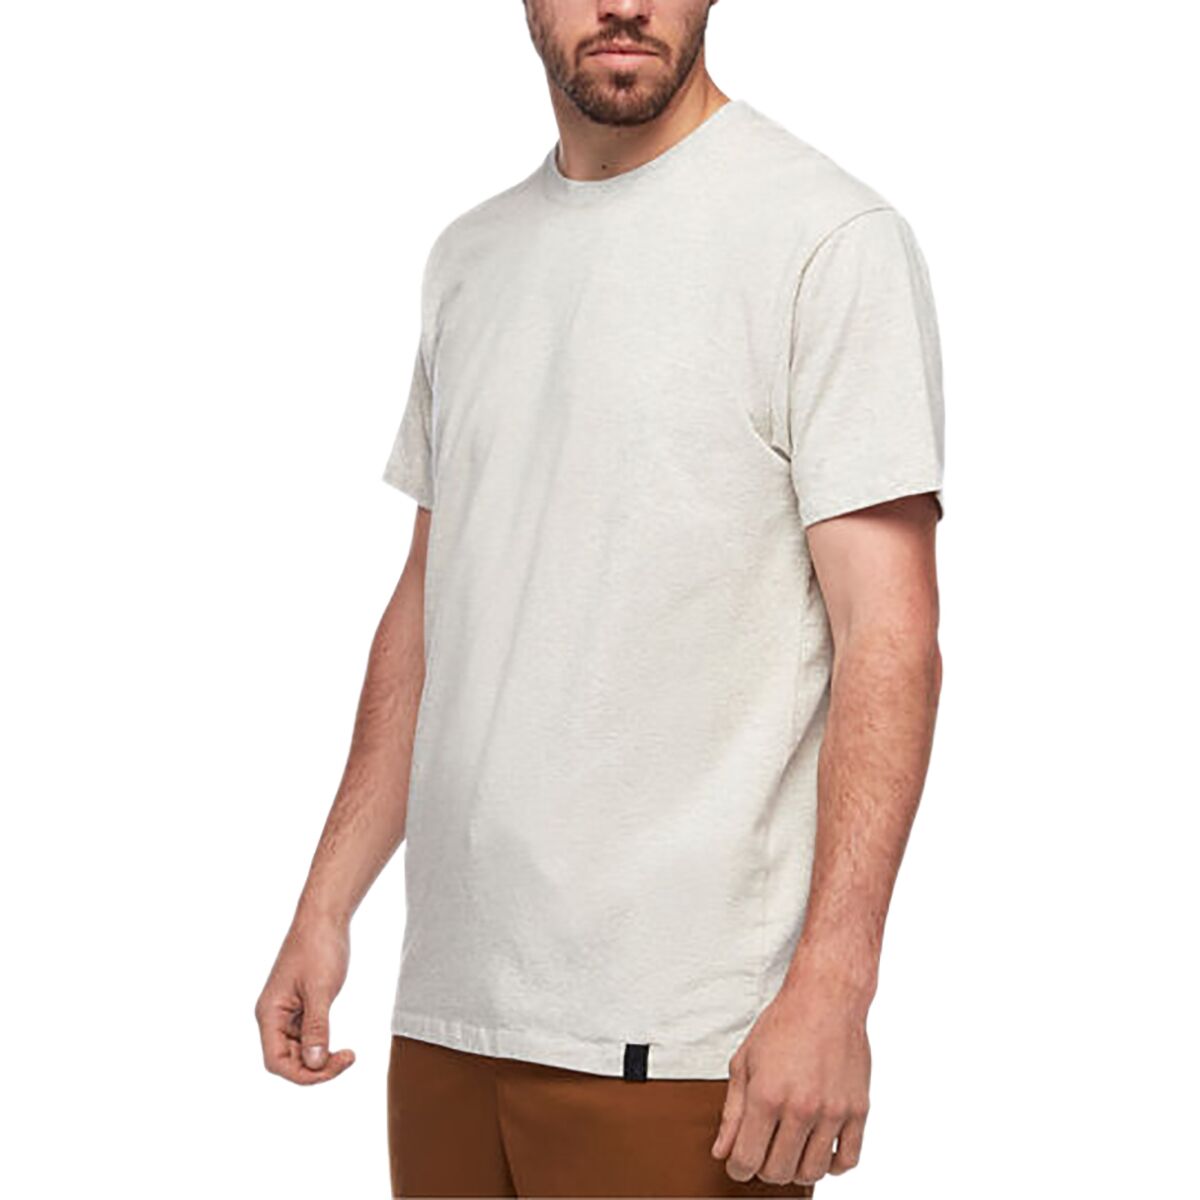 Basis T-Shirt - Men